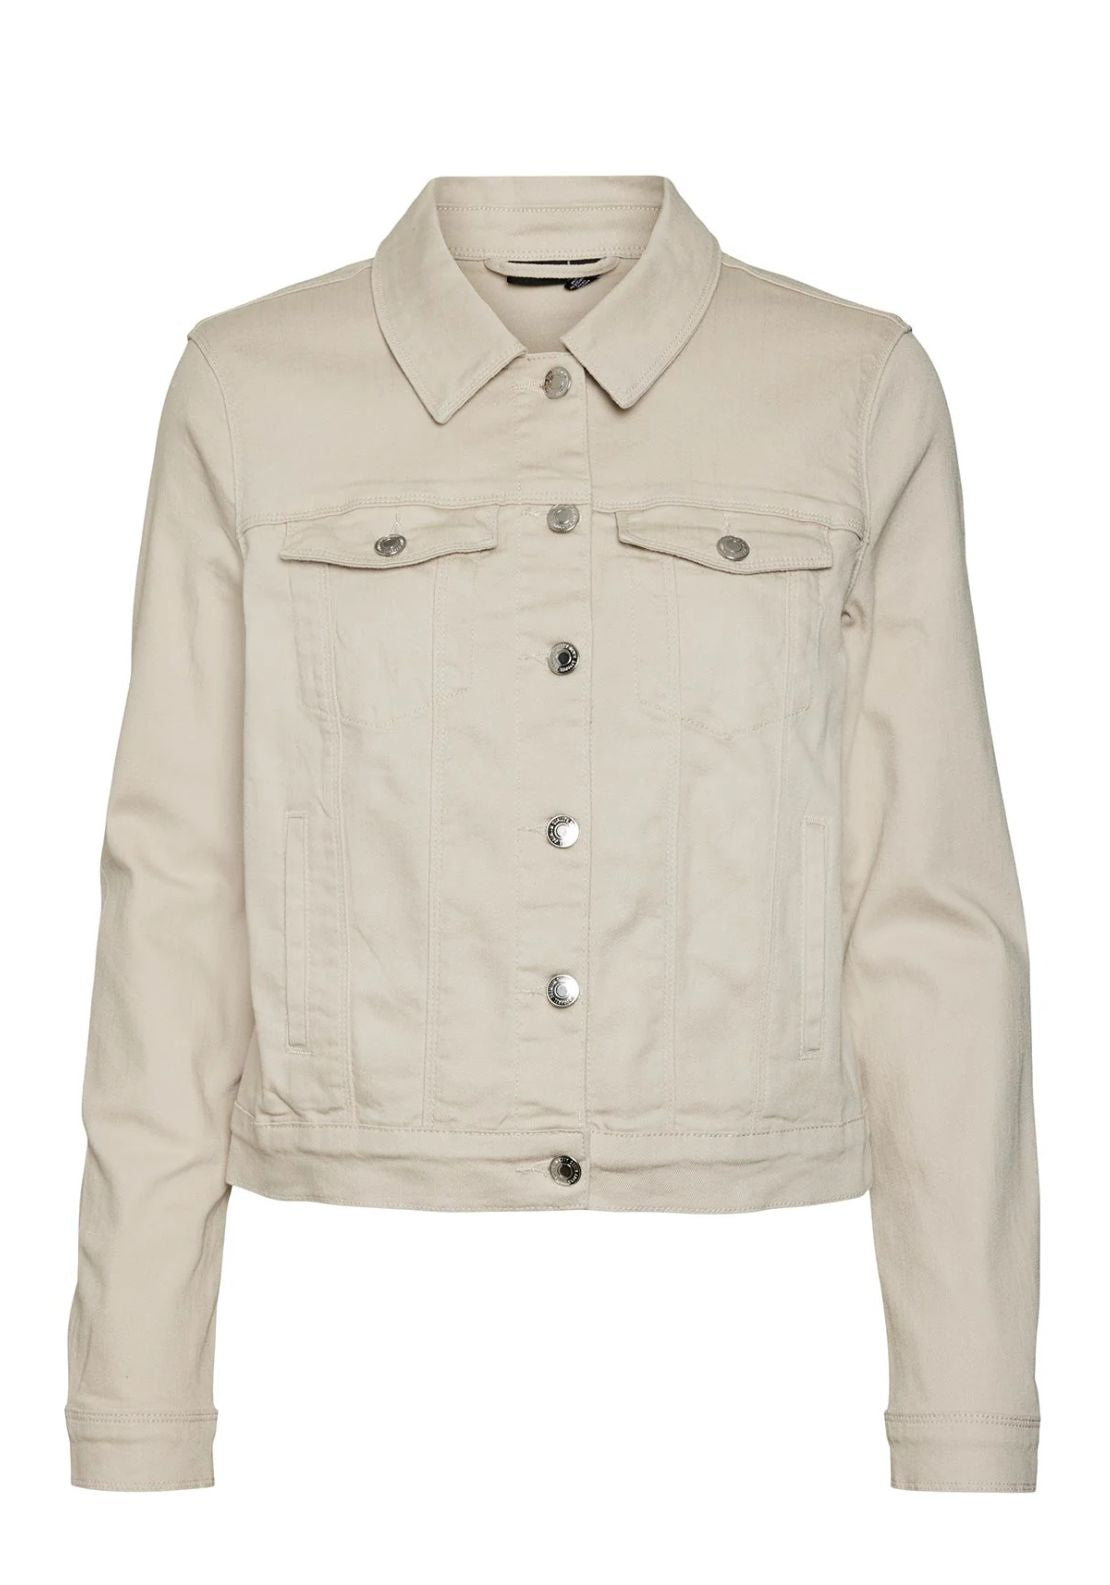 Vero Moda Wild Soya Denim Jacket - Pumice Stone 1 Shaws Department Stores